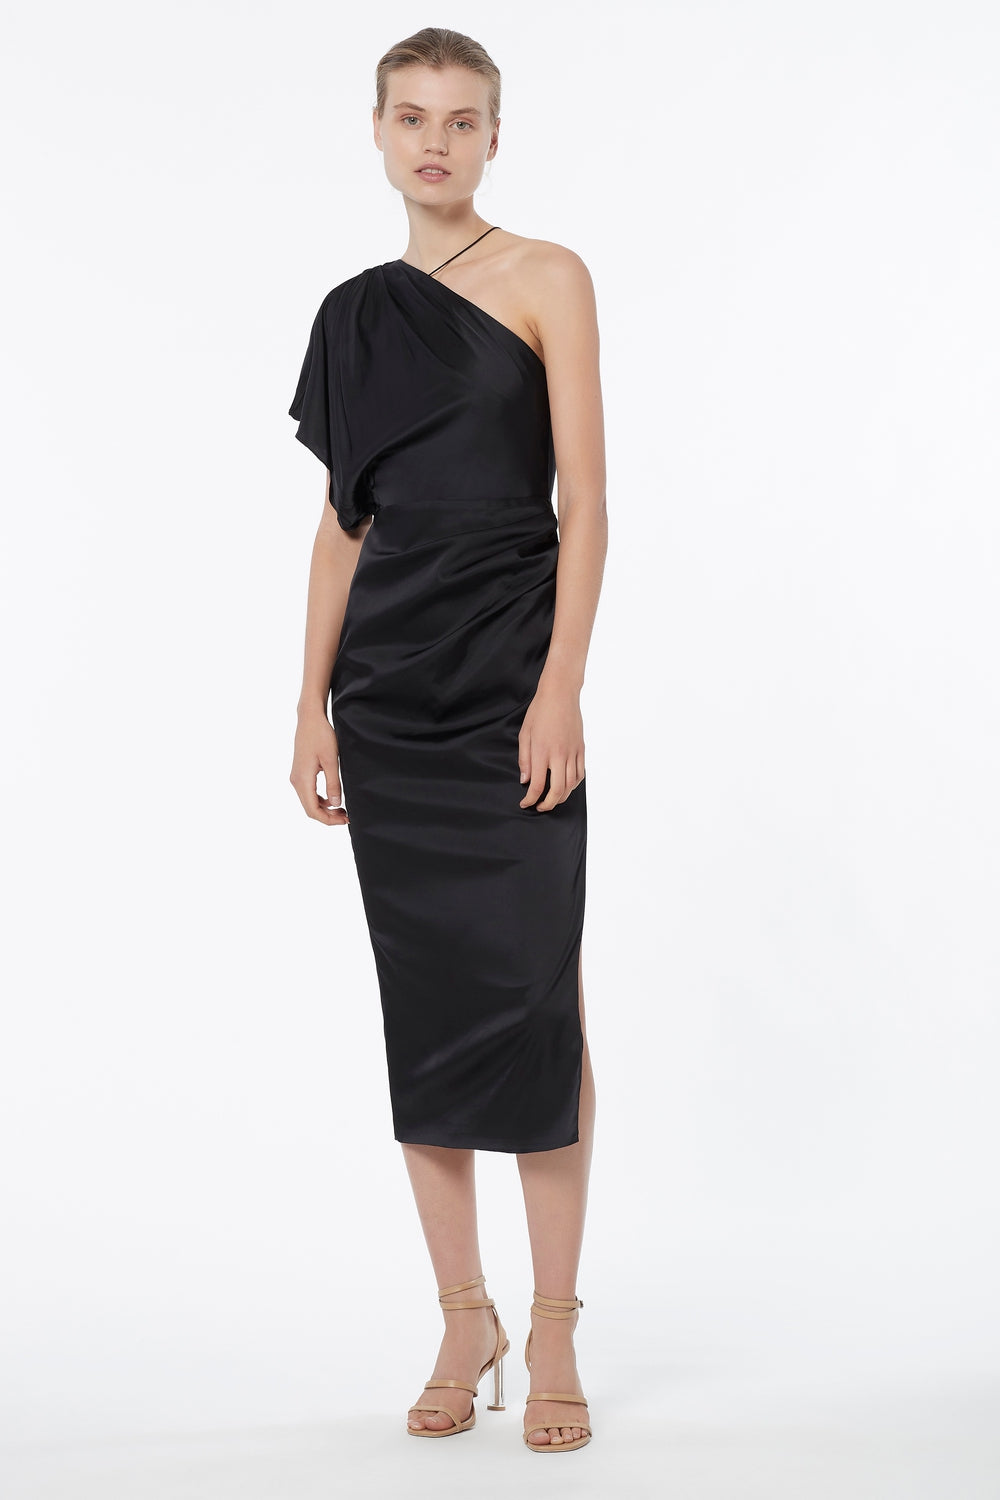 Manning Cartell - Miami Heat Asymmetric Dress Champagne (Size 12